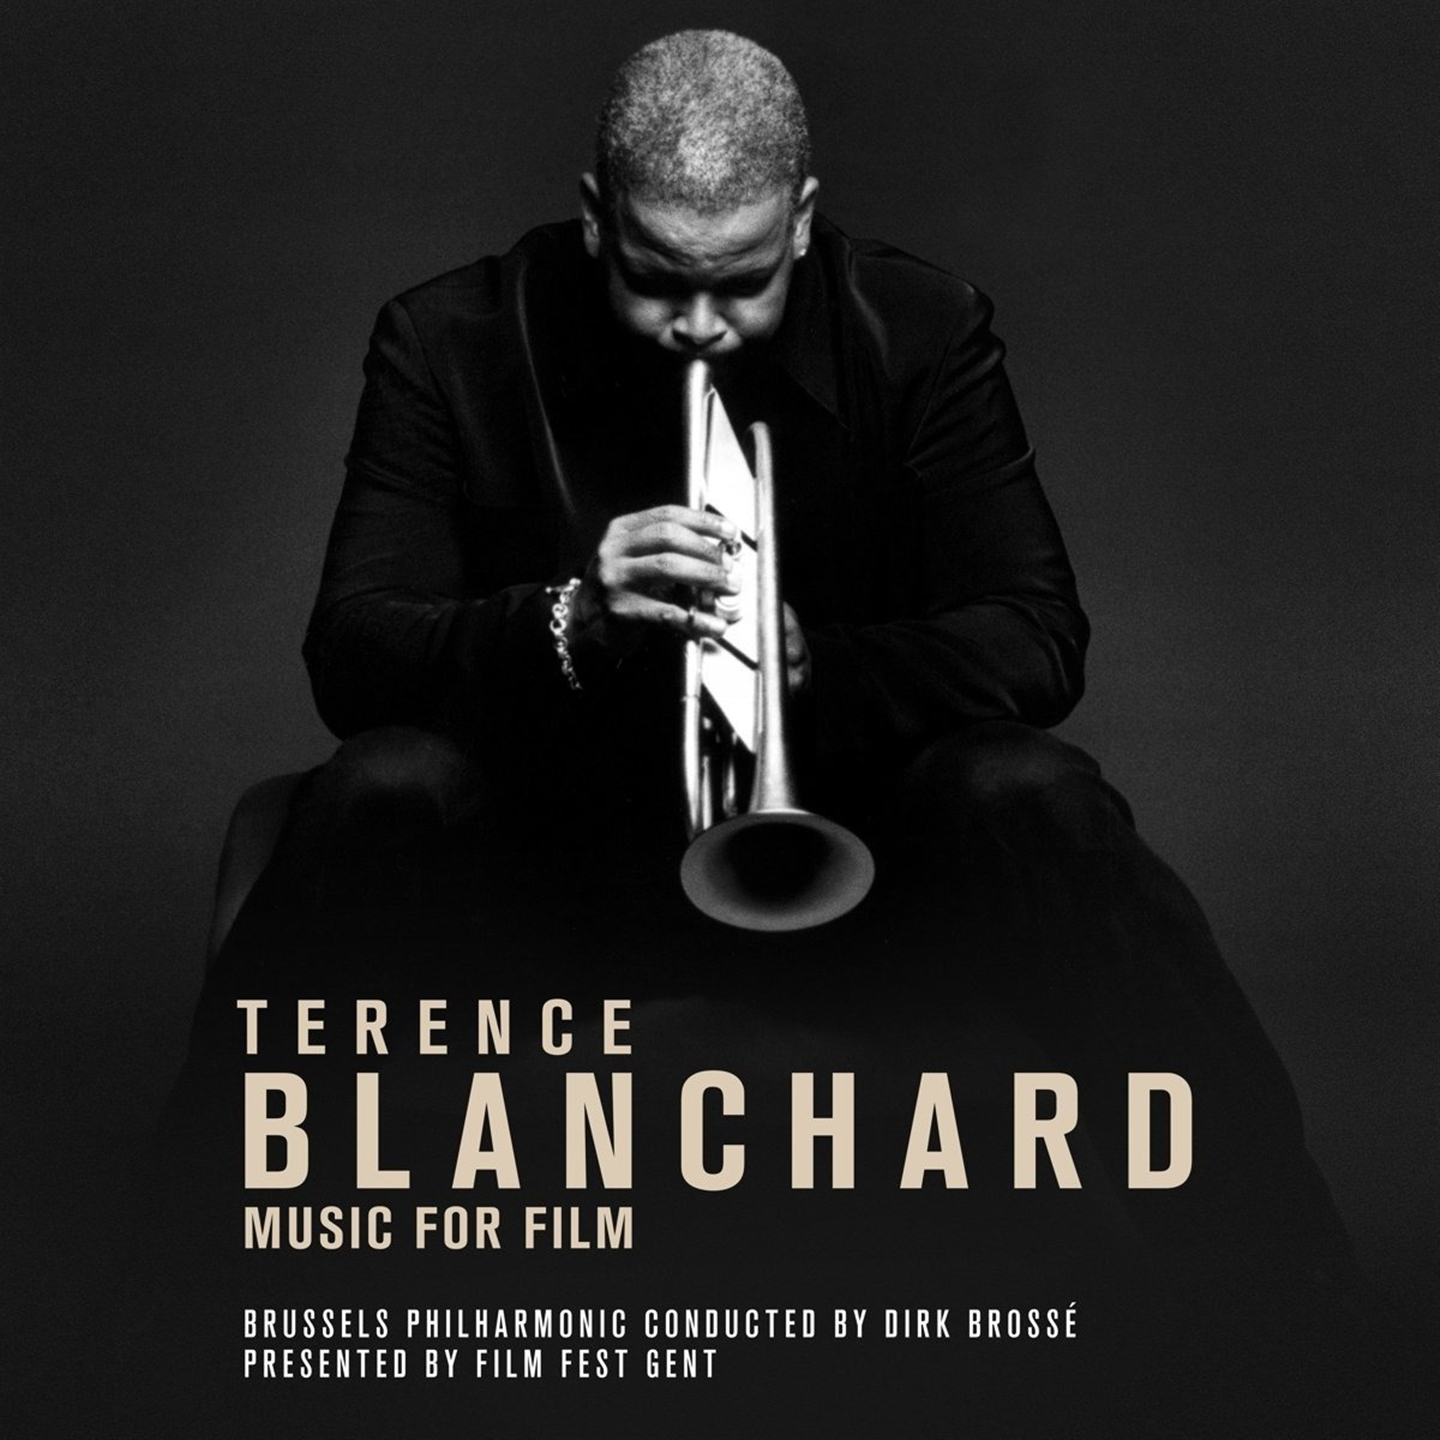 TERENCE BLANCHARD: FILM MUSIC